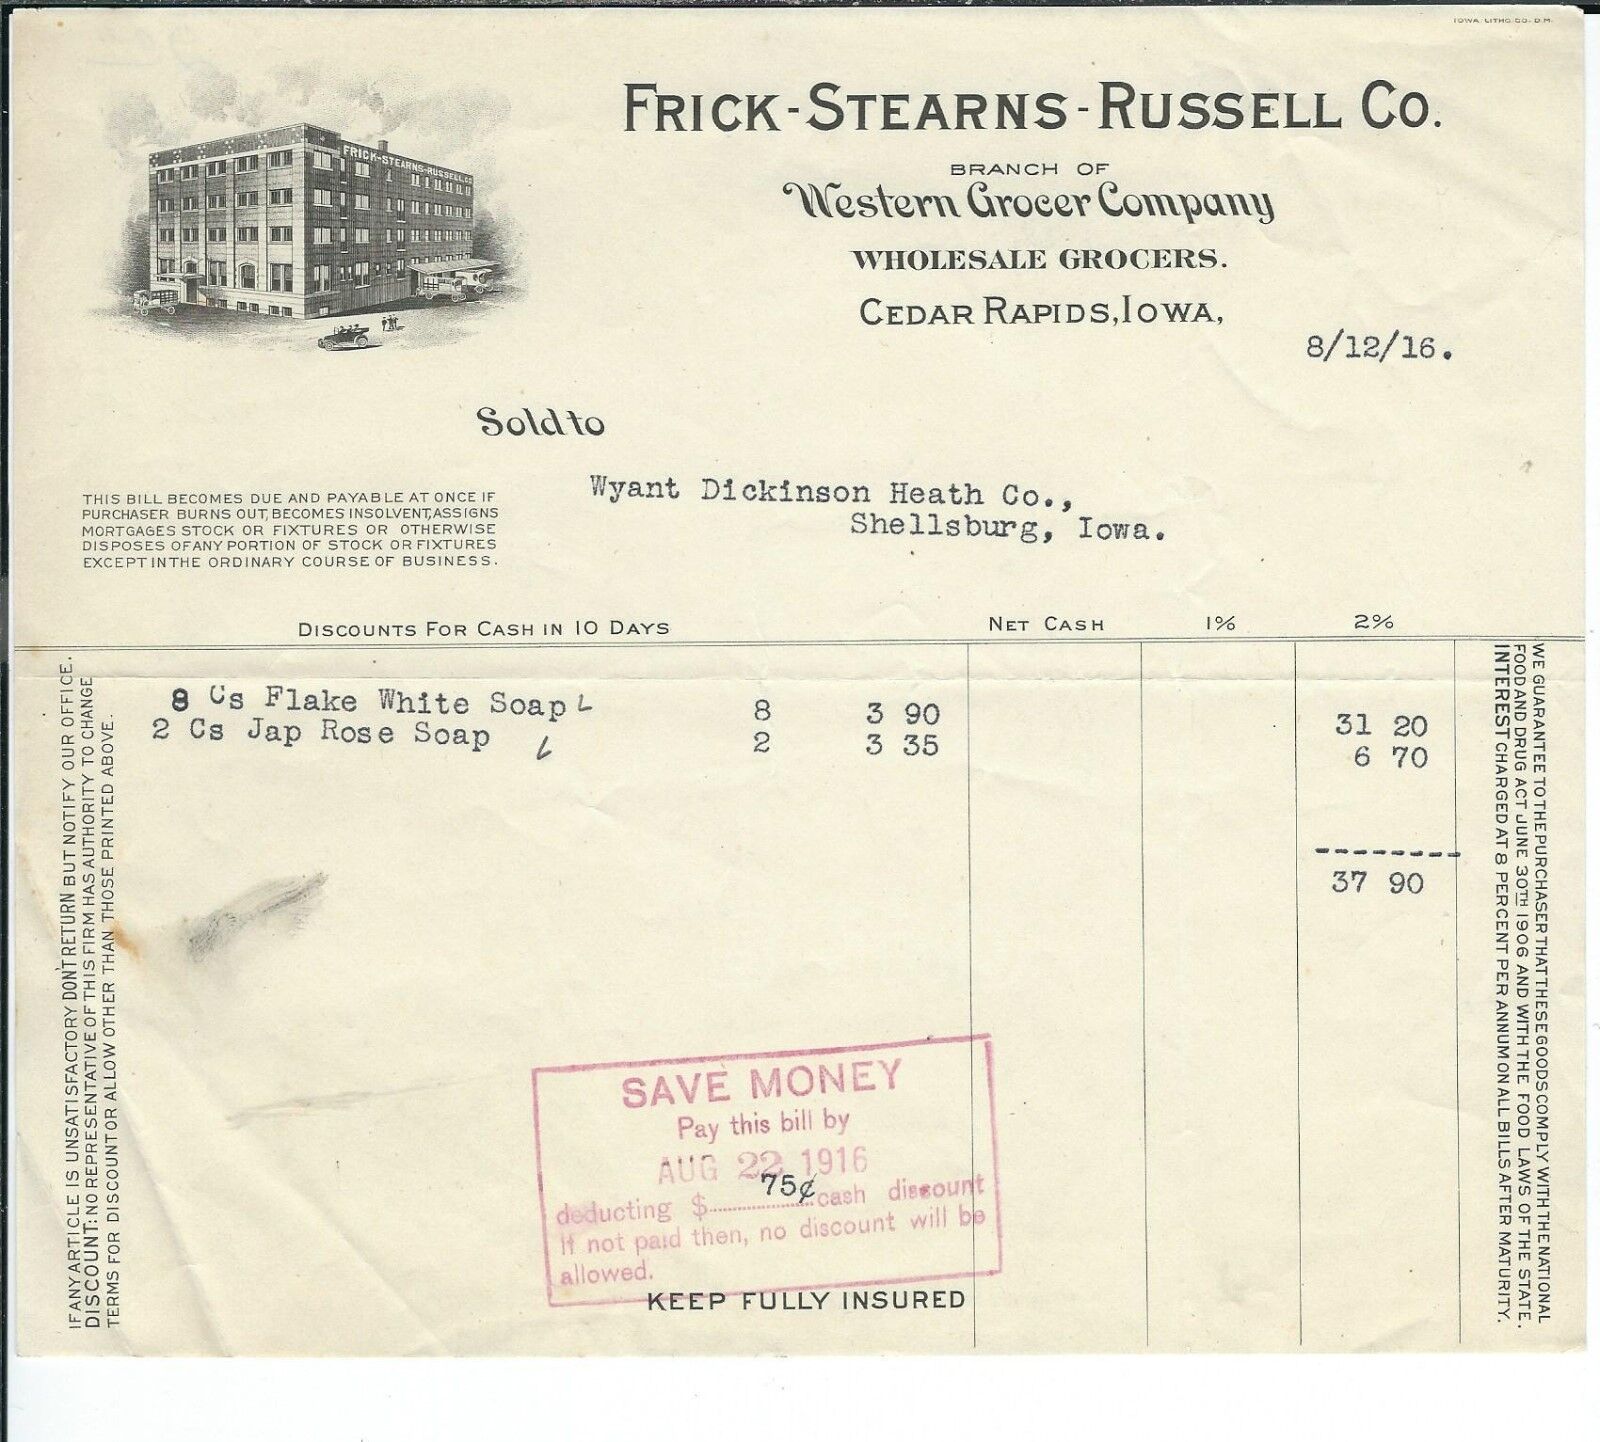 ME-103 - Cedar Rapids, Iowa, August 12, 1916 Invoice Frick Stearns Russell Co